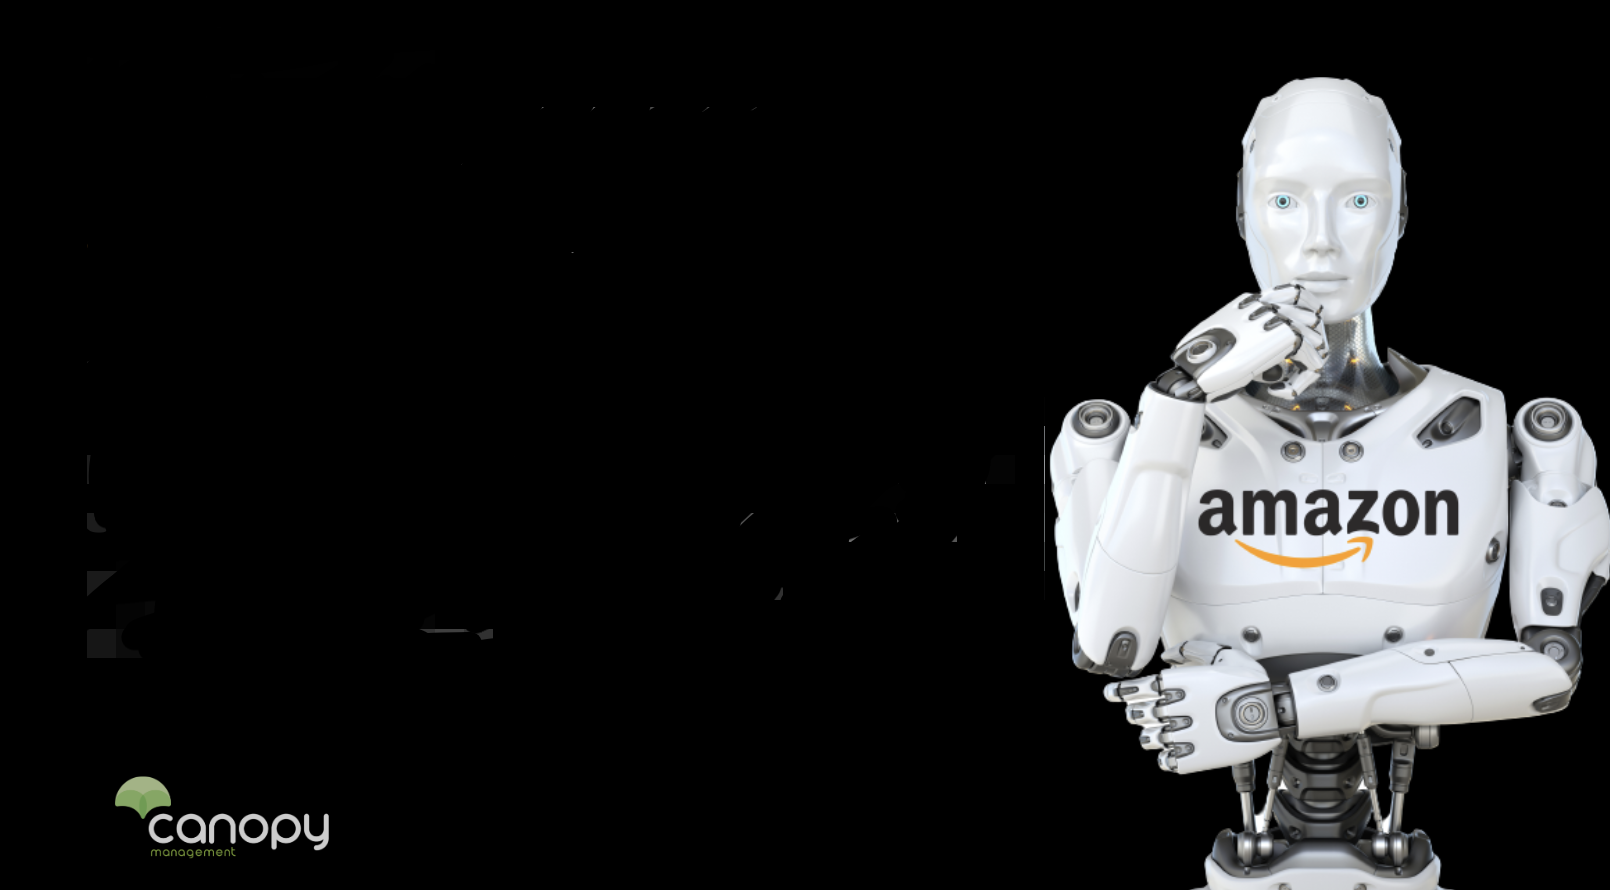 white AI robot with Amazon on chest on black background